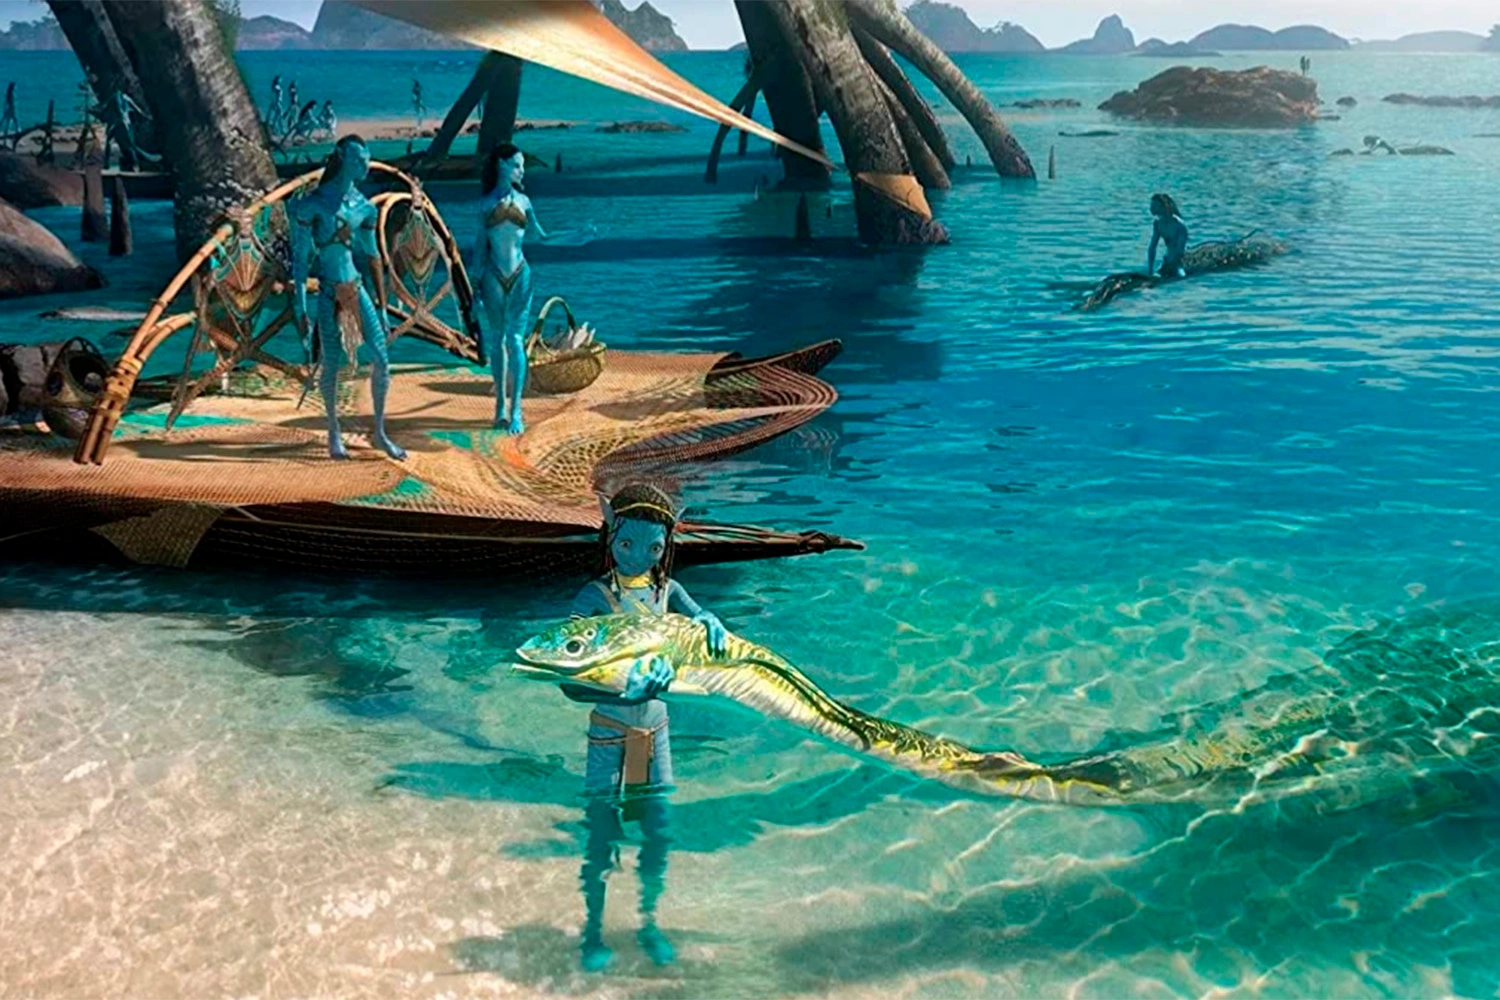 Avatar 2” já tem título oficial, sinopse e 1º trailer; confira